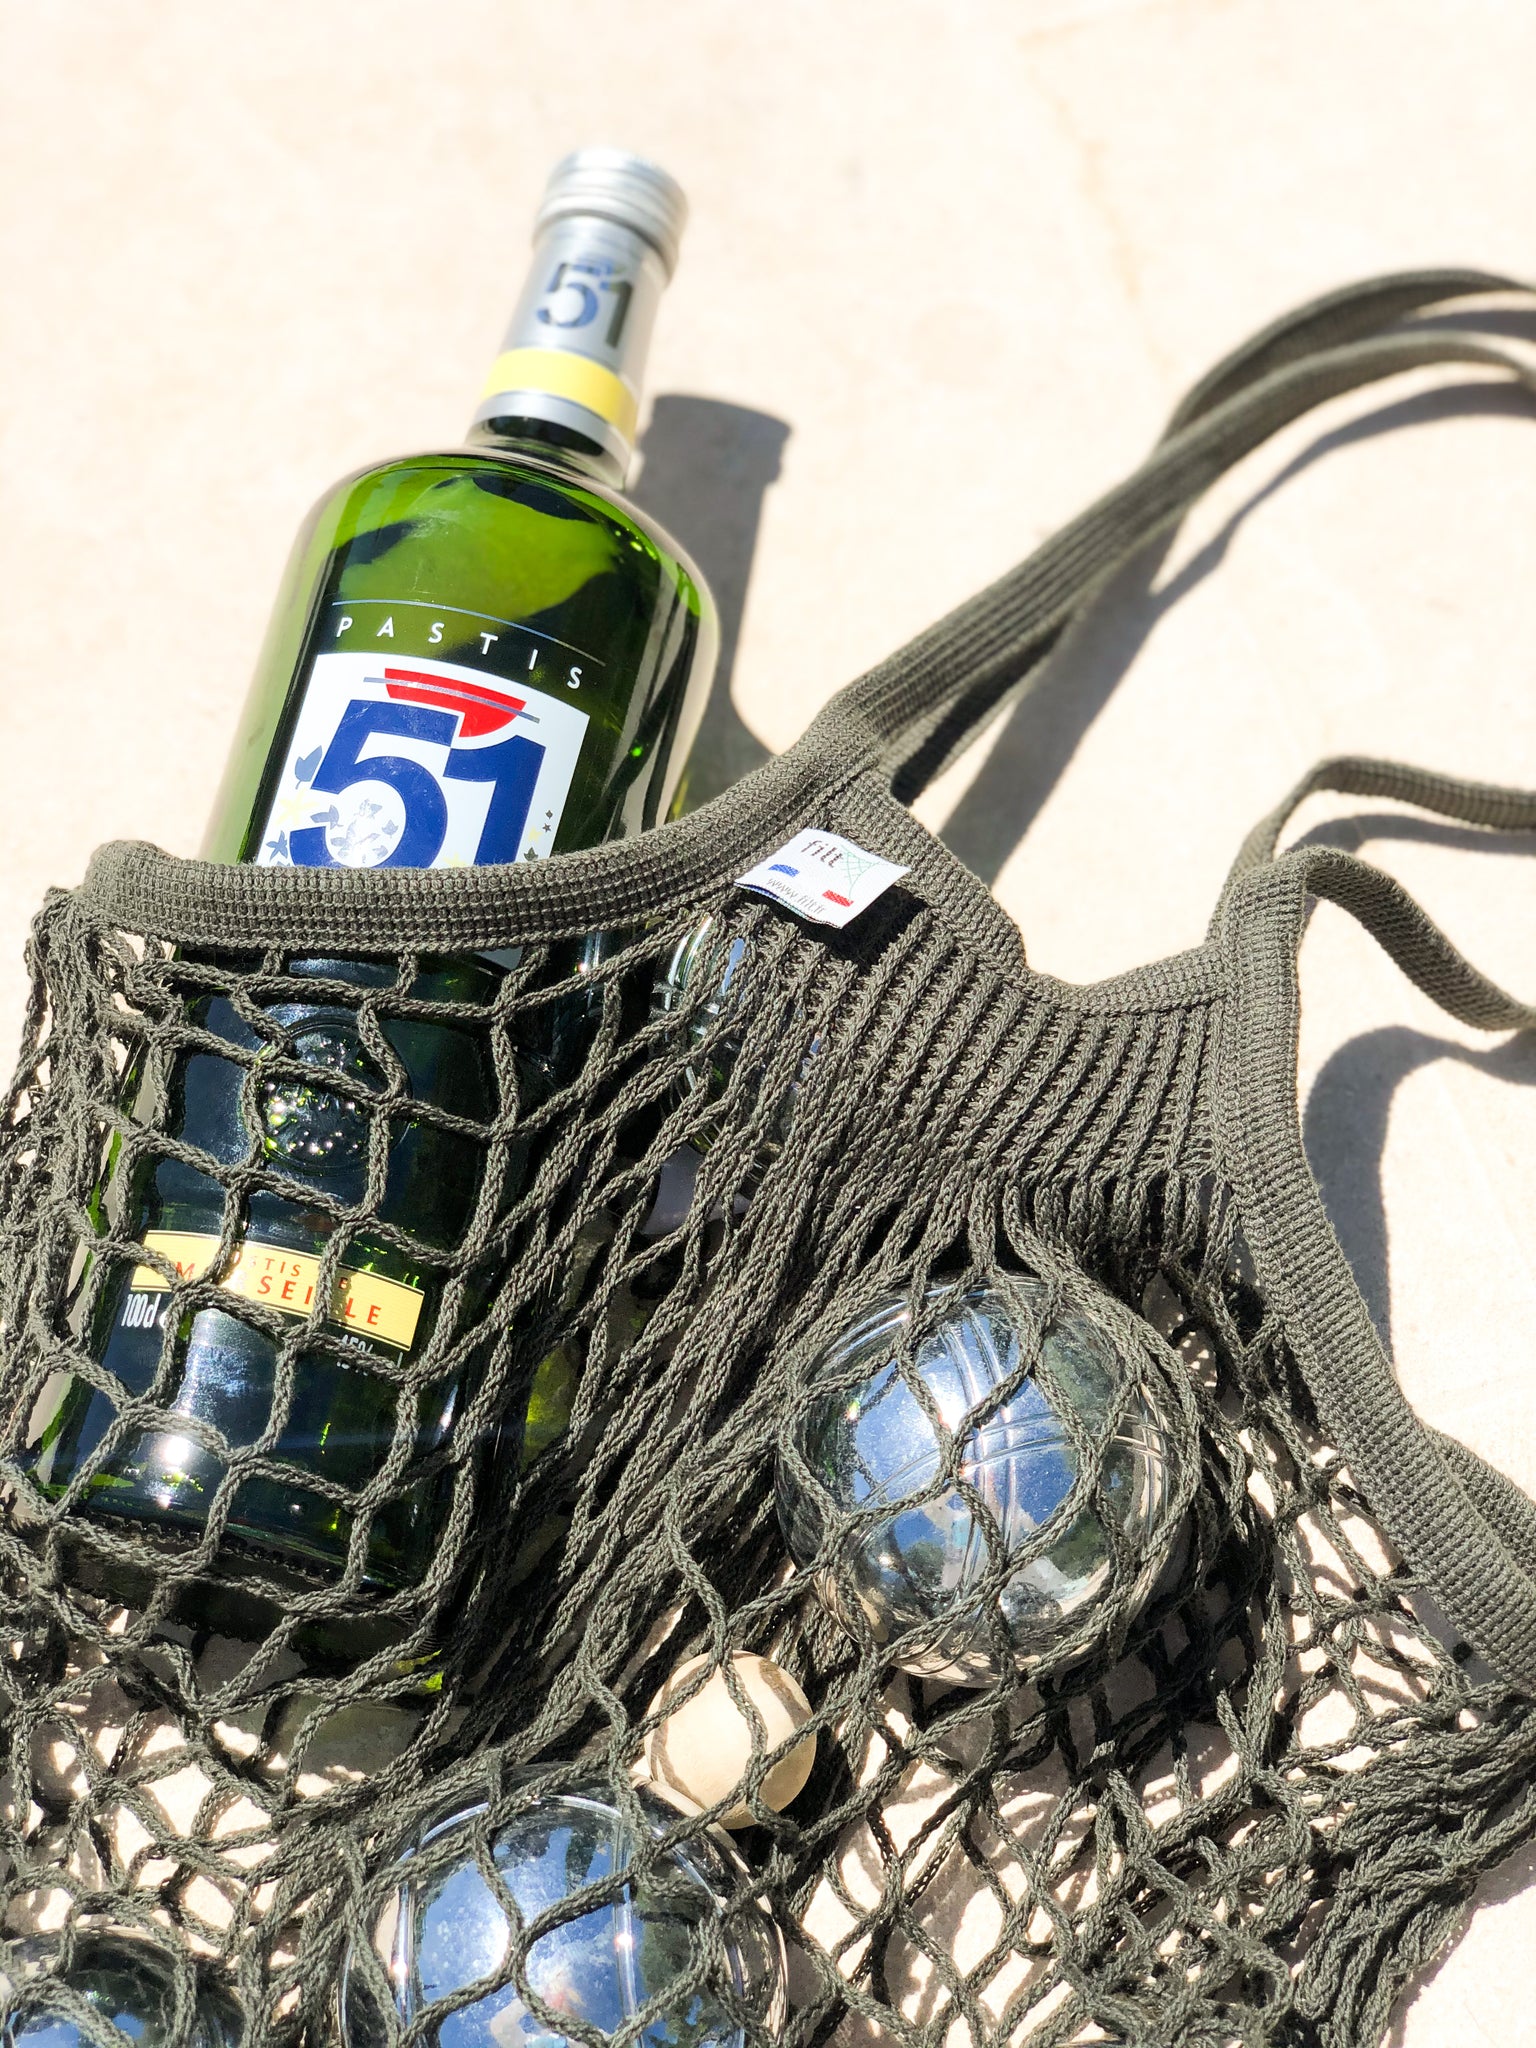 Dark olive green net bag holding petanque balls and bottle of Pastis.